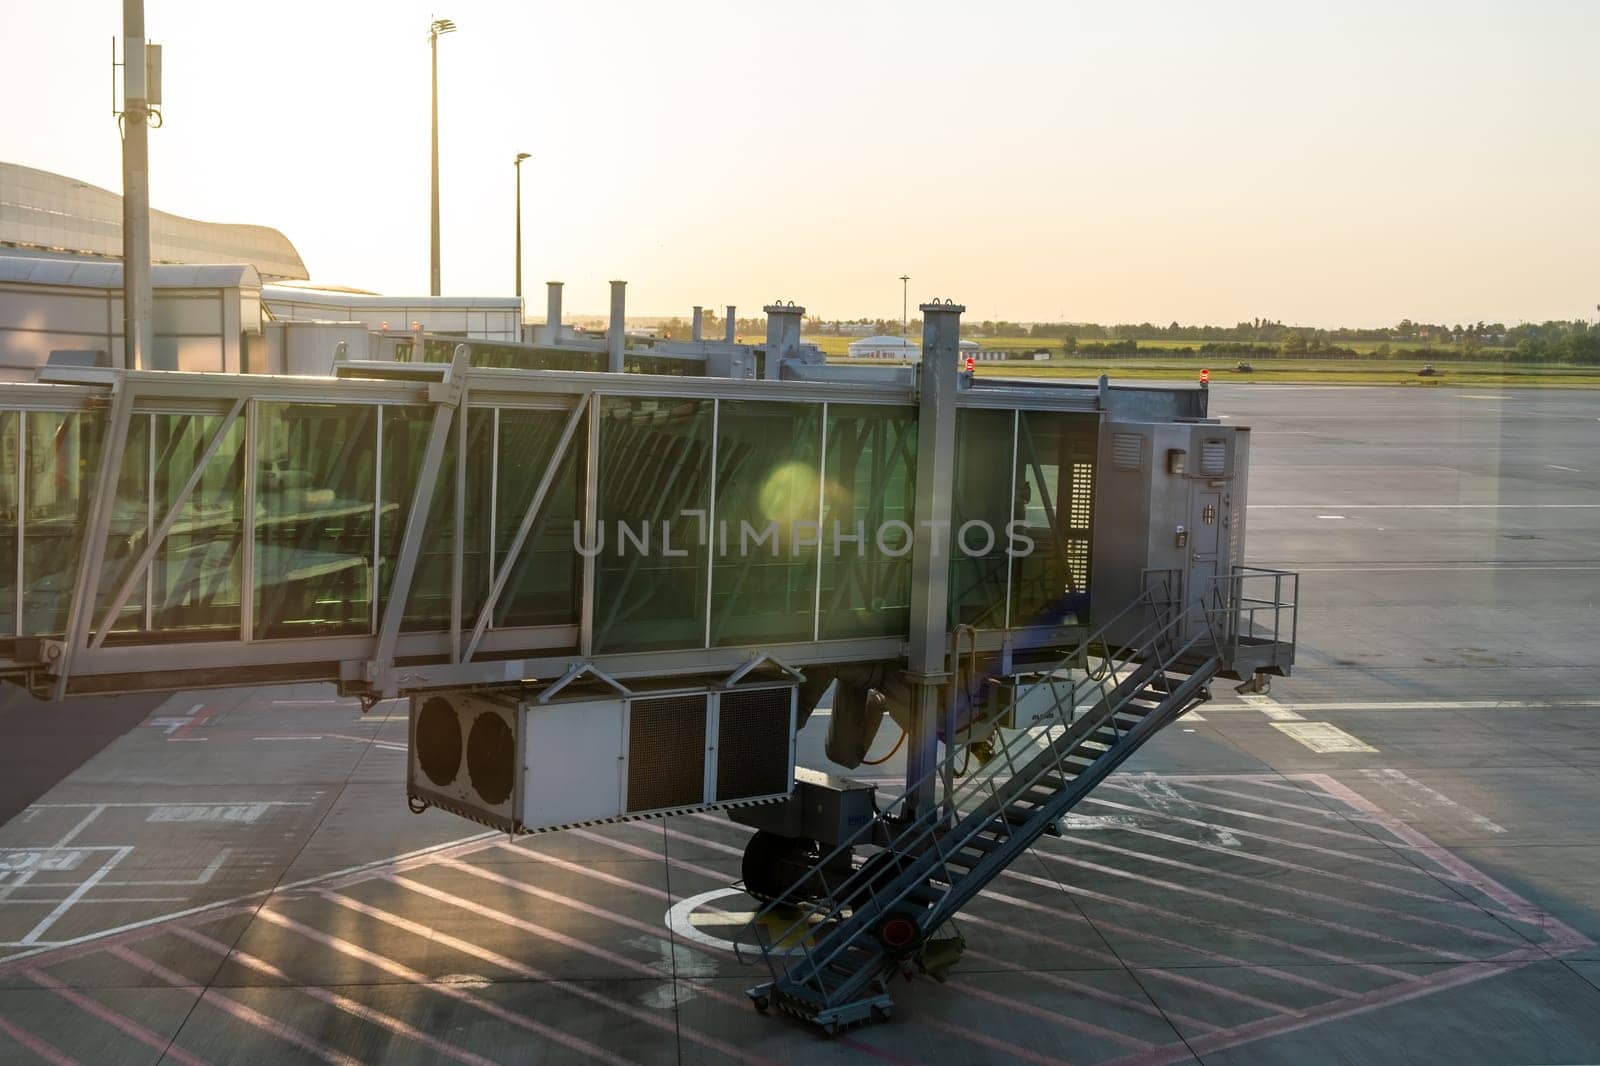 Passenger boarding bridge at airport apron in sun light by vladimka